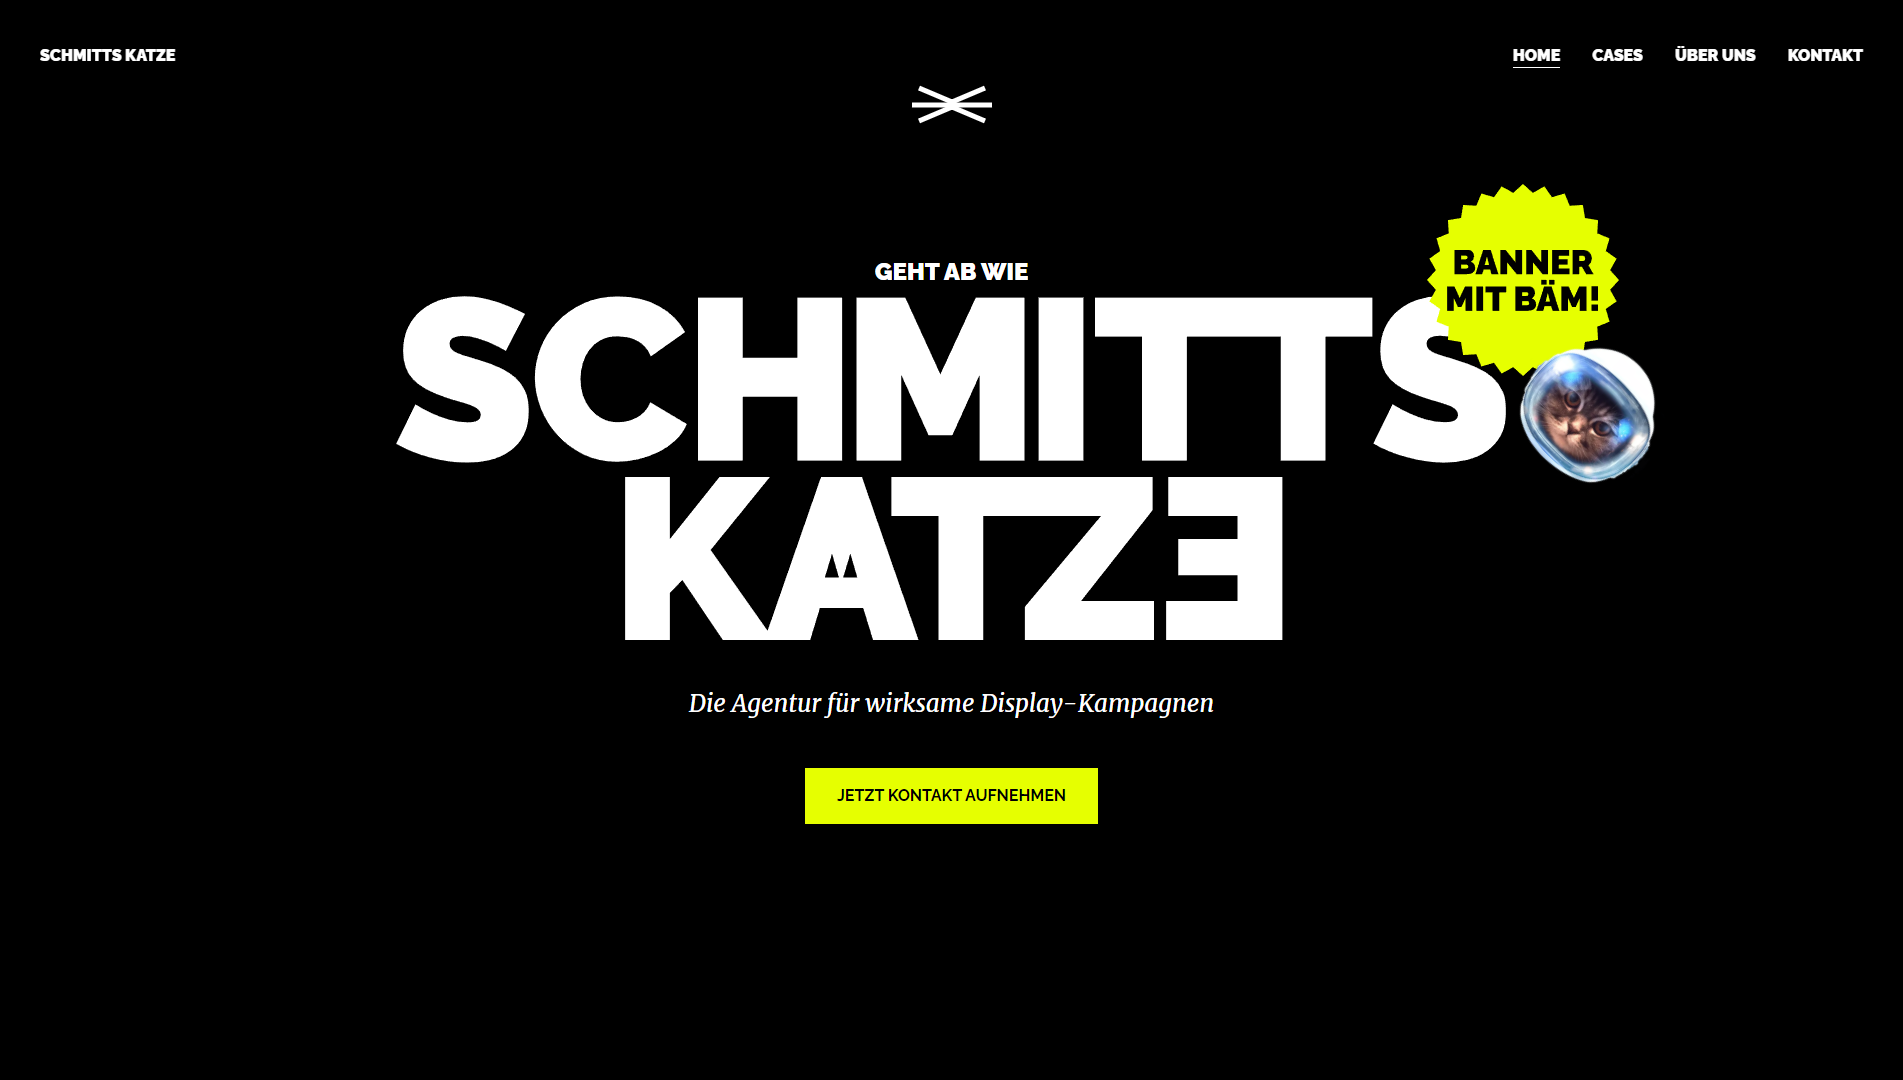 Schmitts katze all winners animation